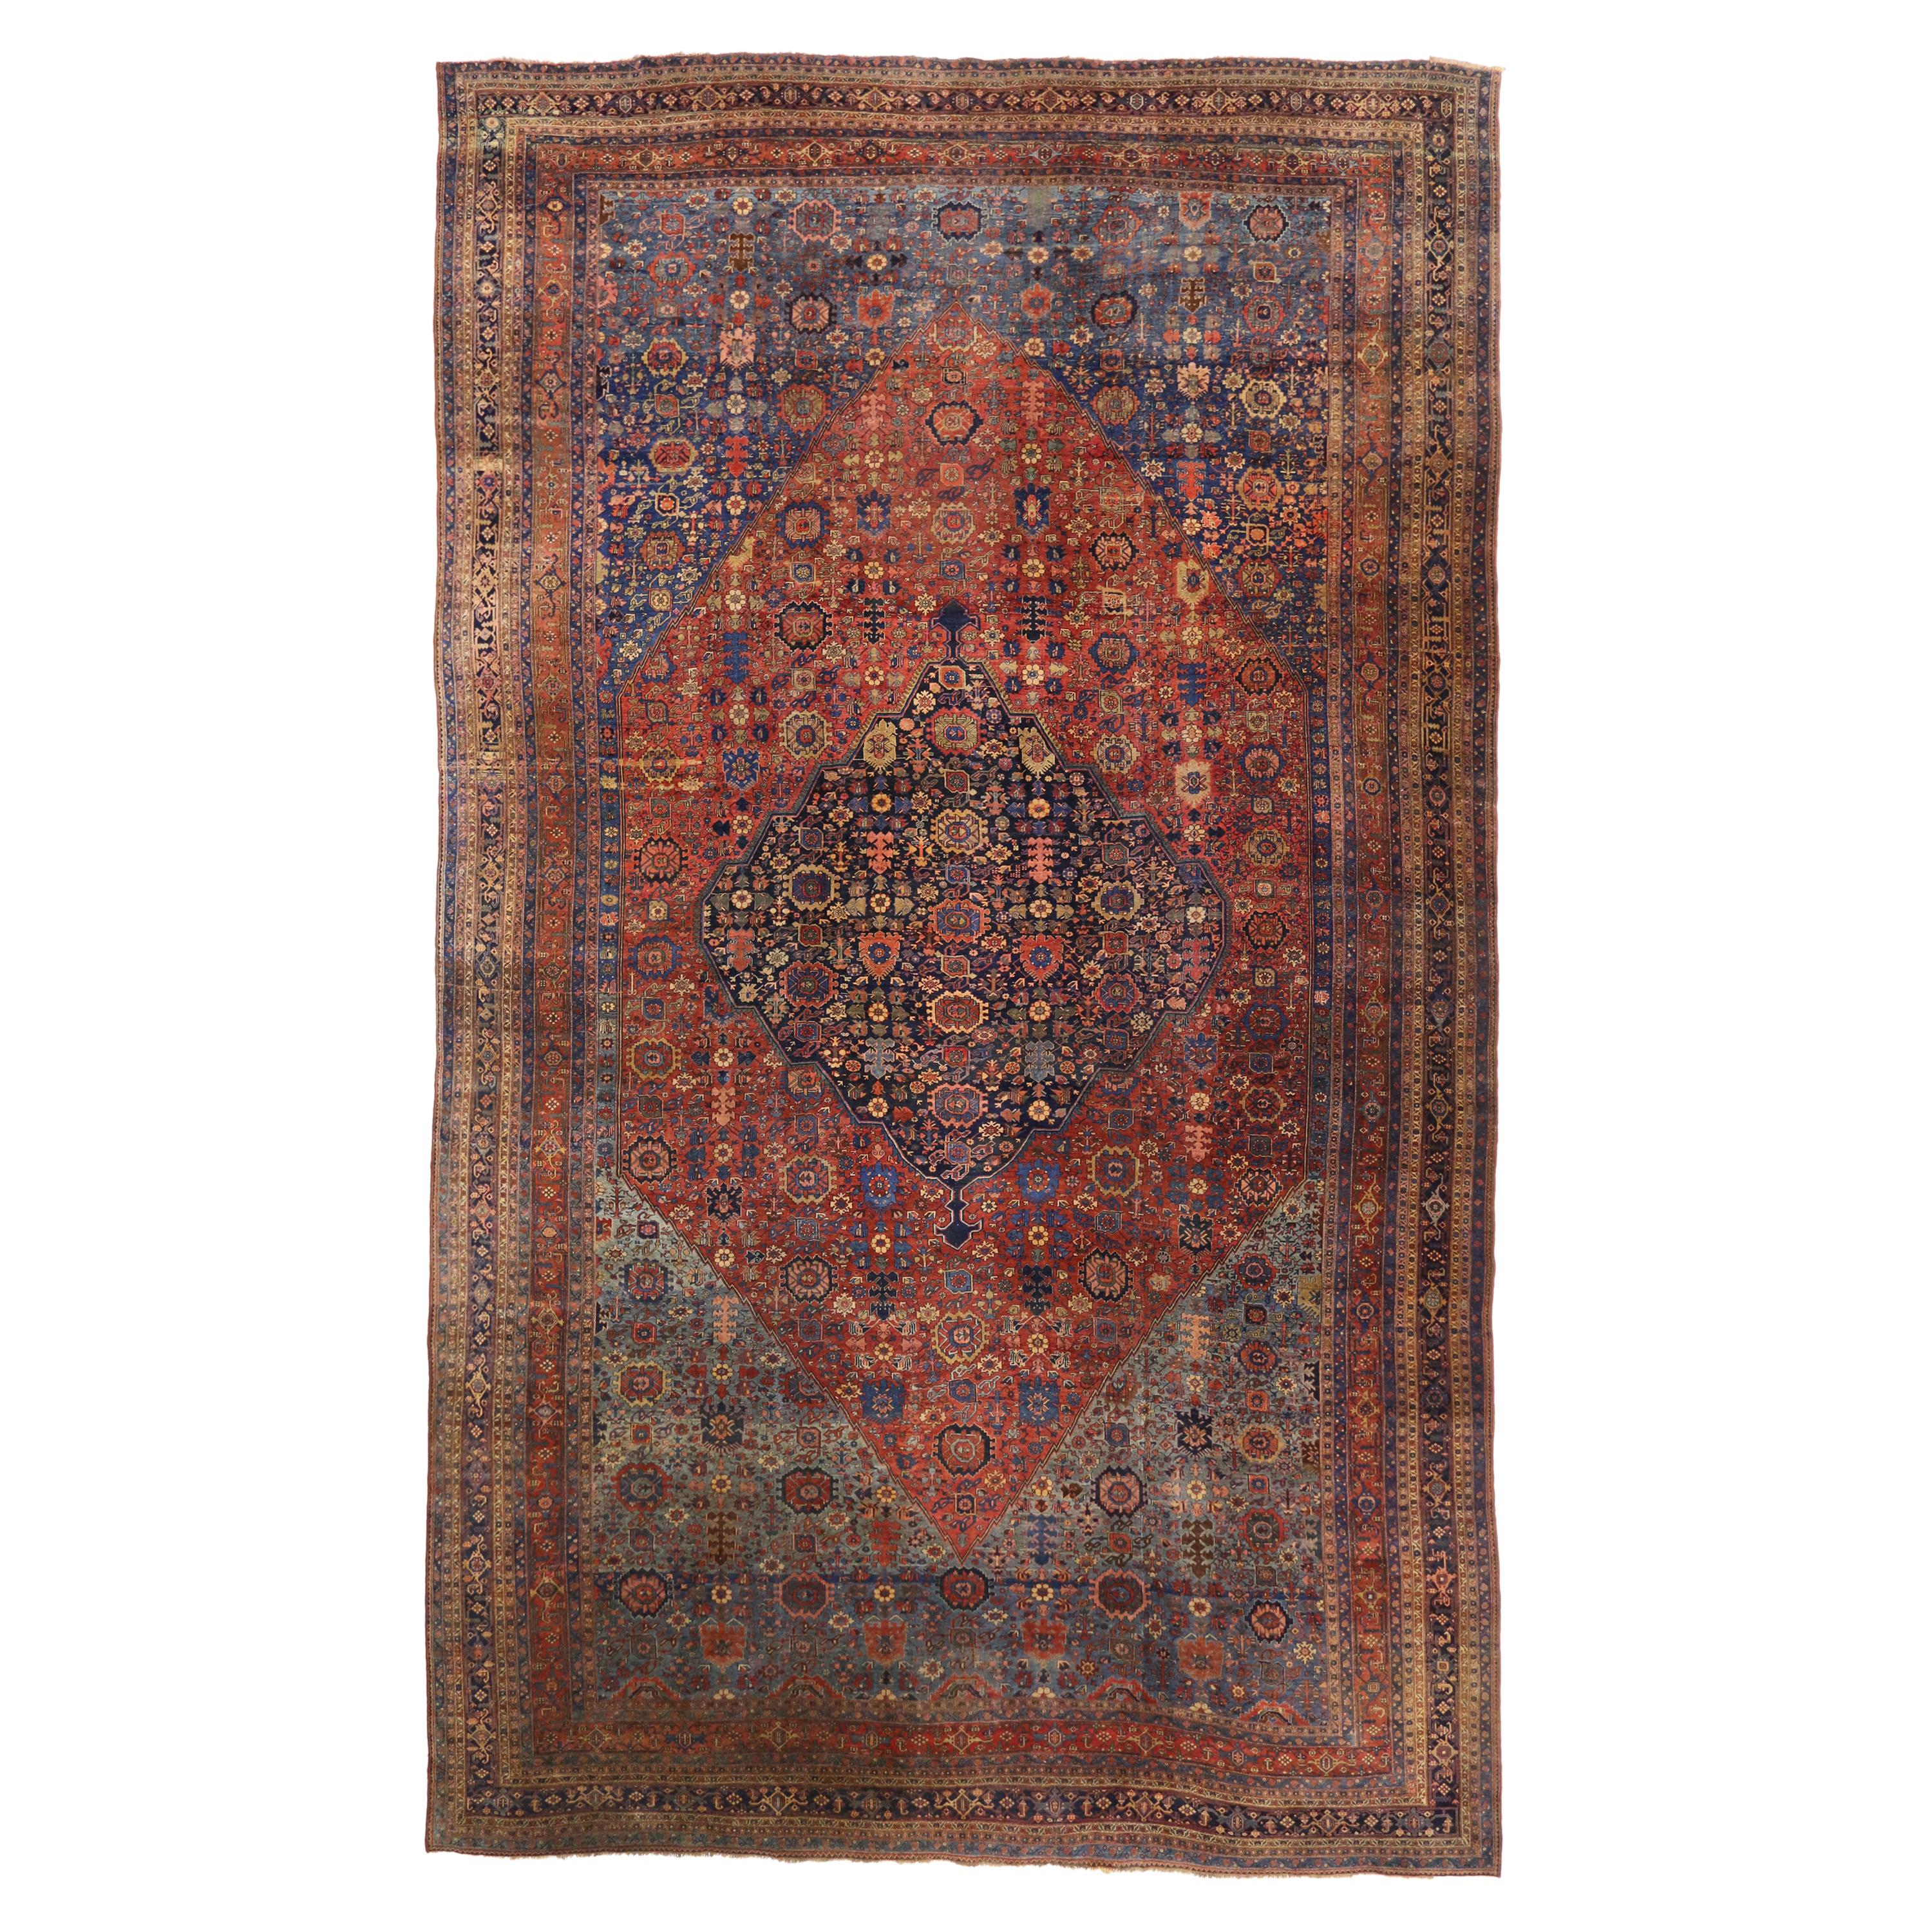 1870s Antique Persian Halwai Bijar Rug Hotel Lobby Size Carpet